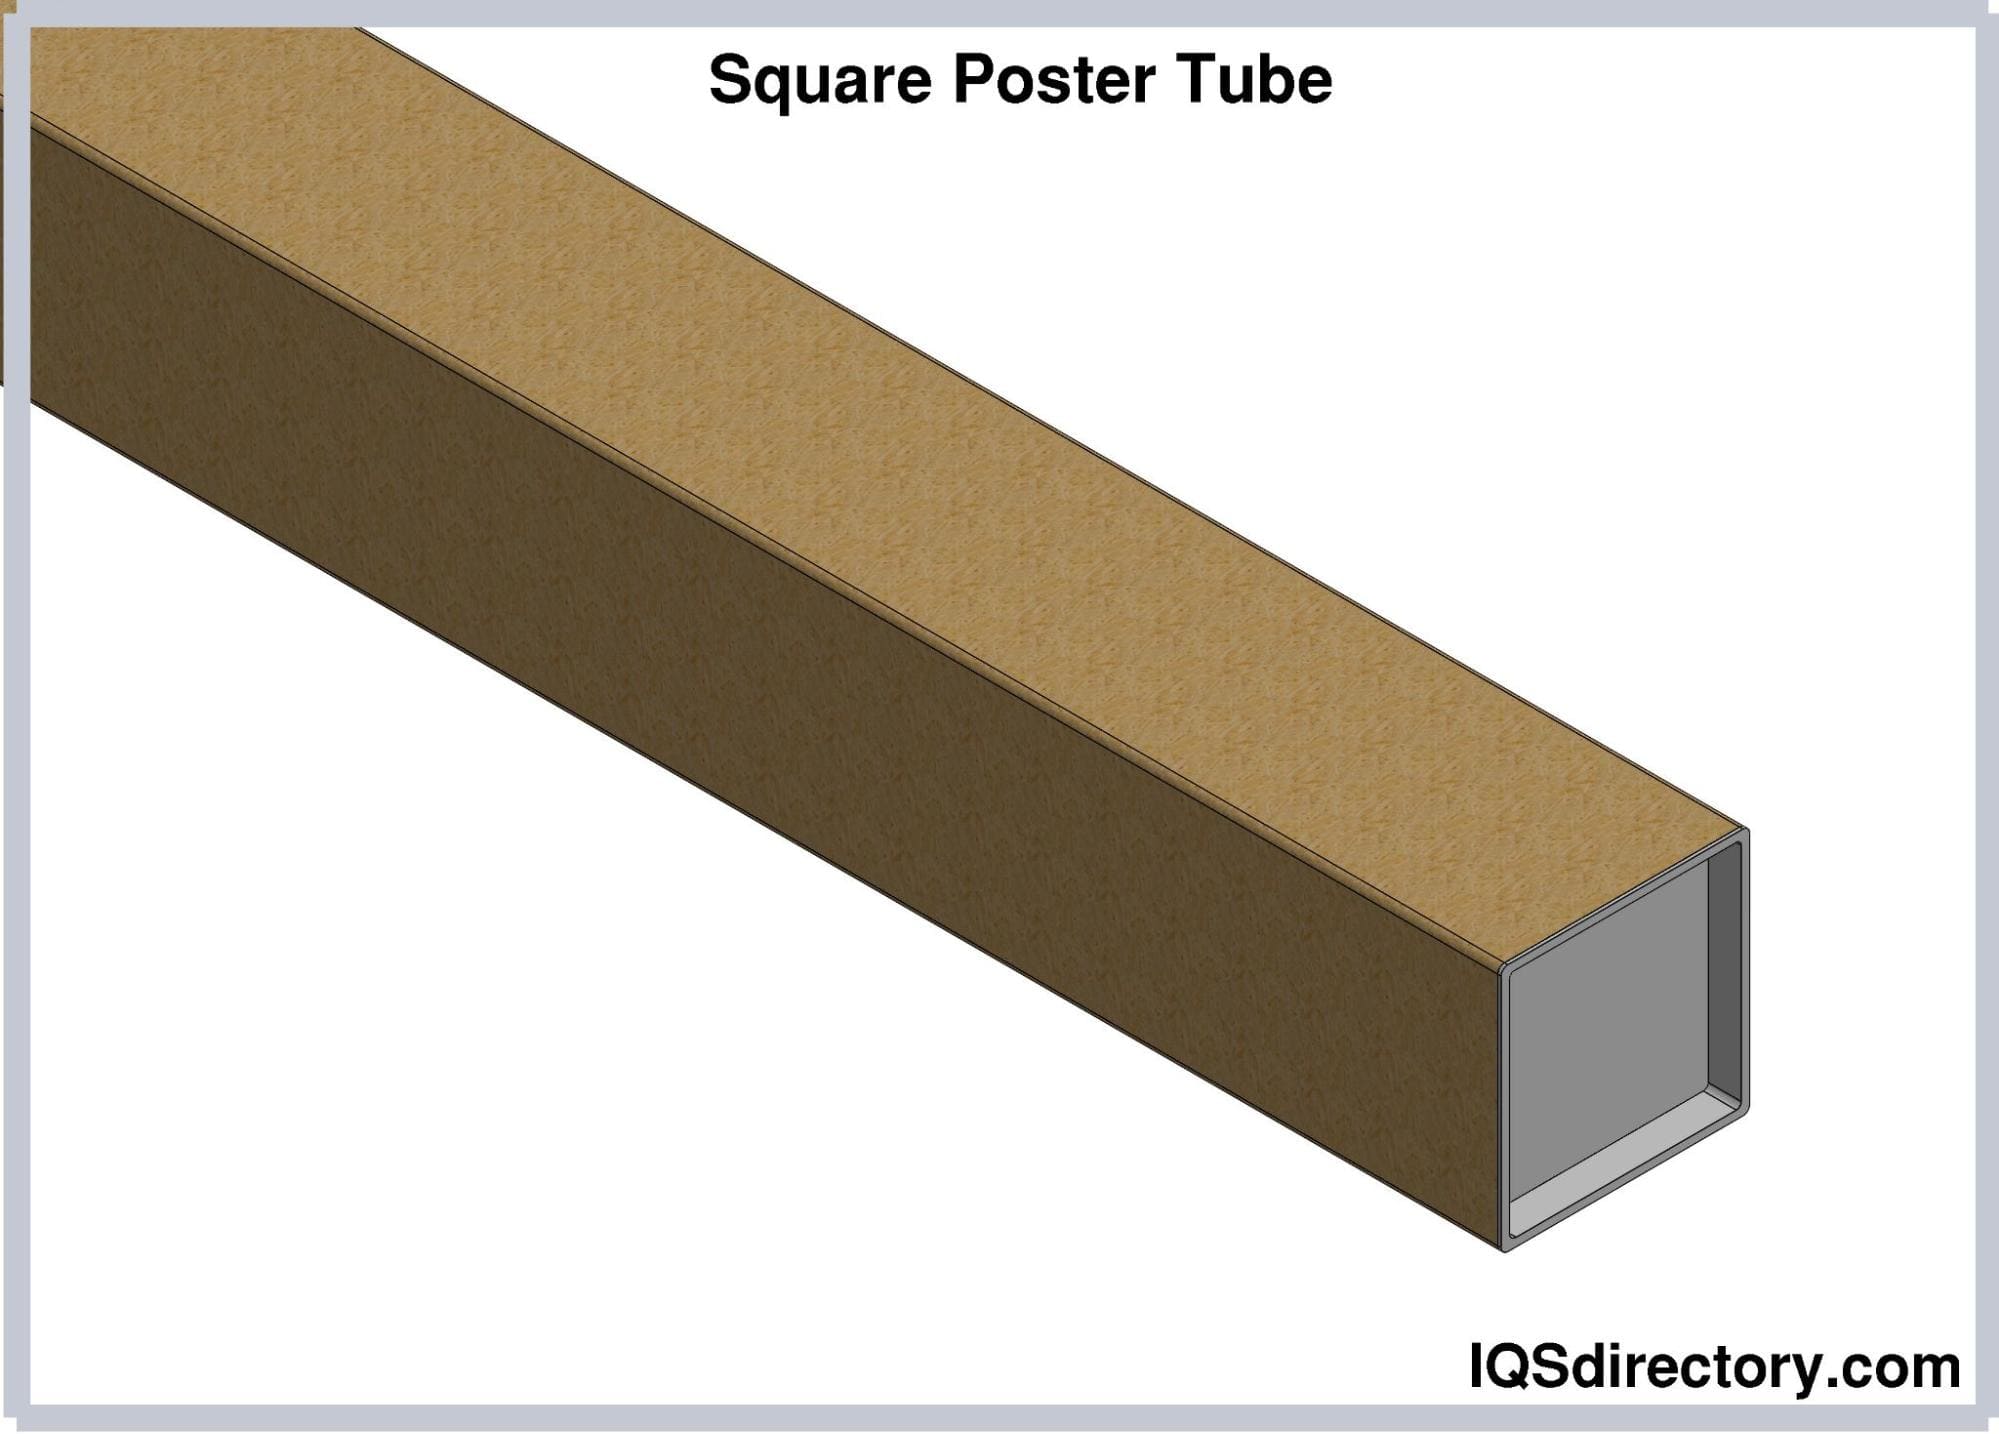 Square Poster Tube